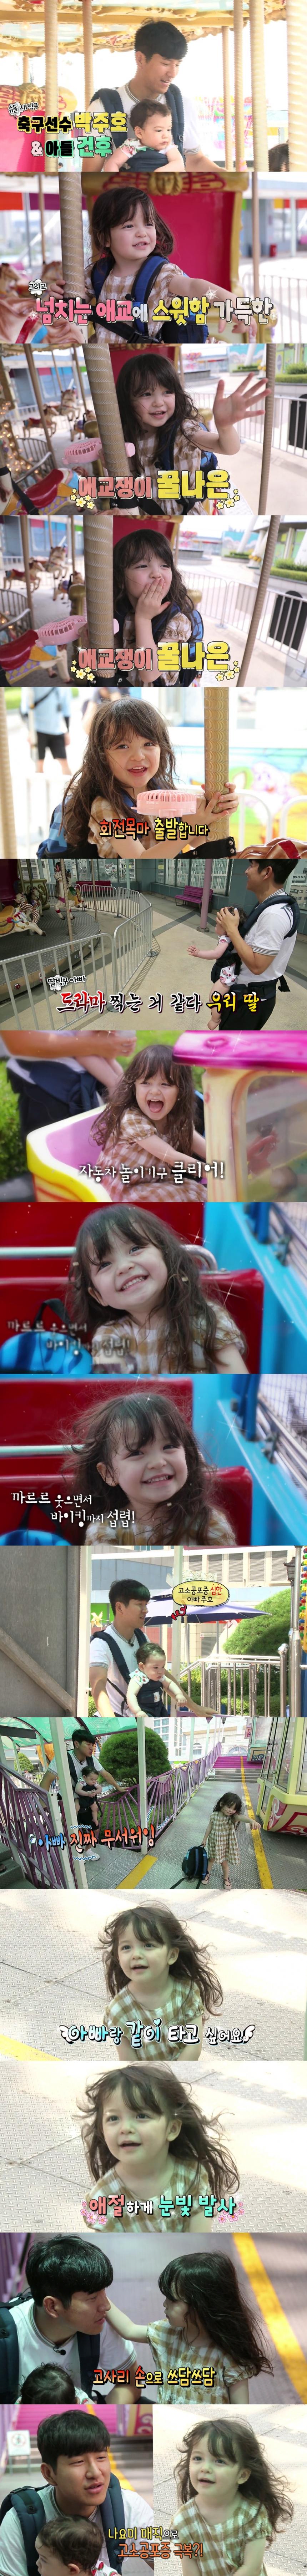 KBS2 ‘해피선데이-슈퍼맨이 돌아왔다’ 티저 캡처